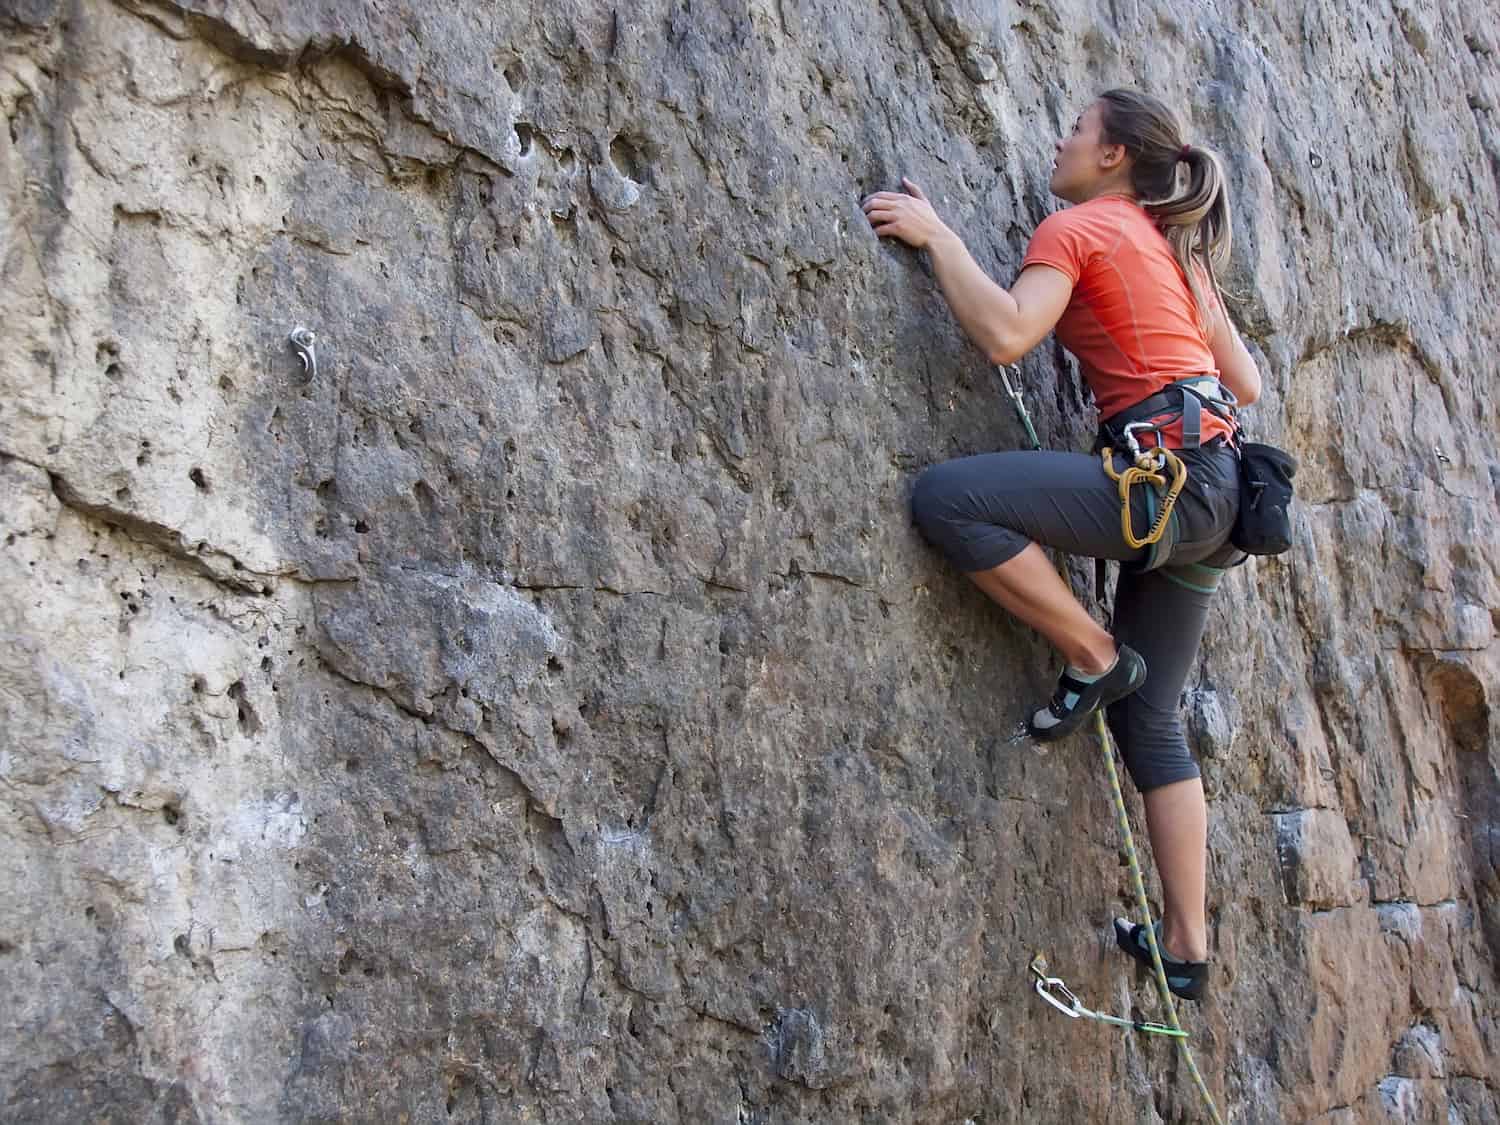 Incredible Hulk rock climbing